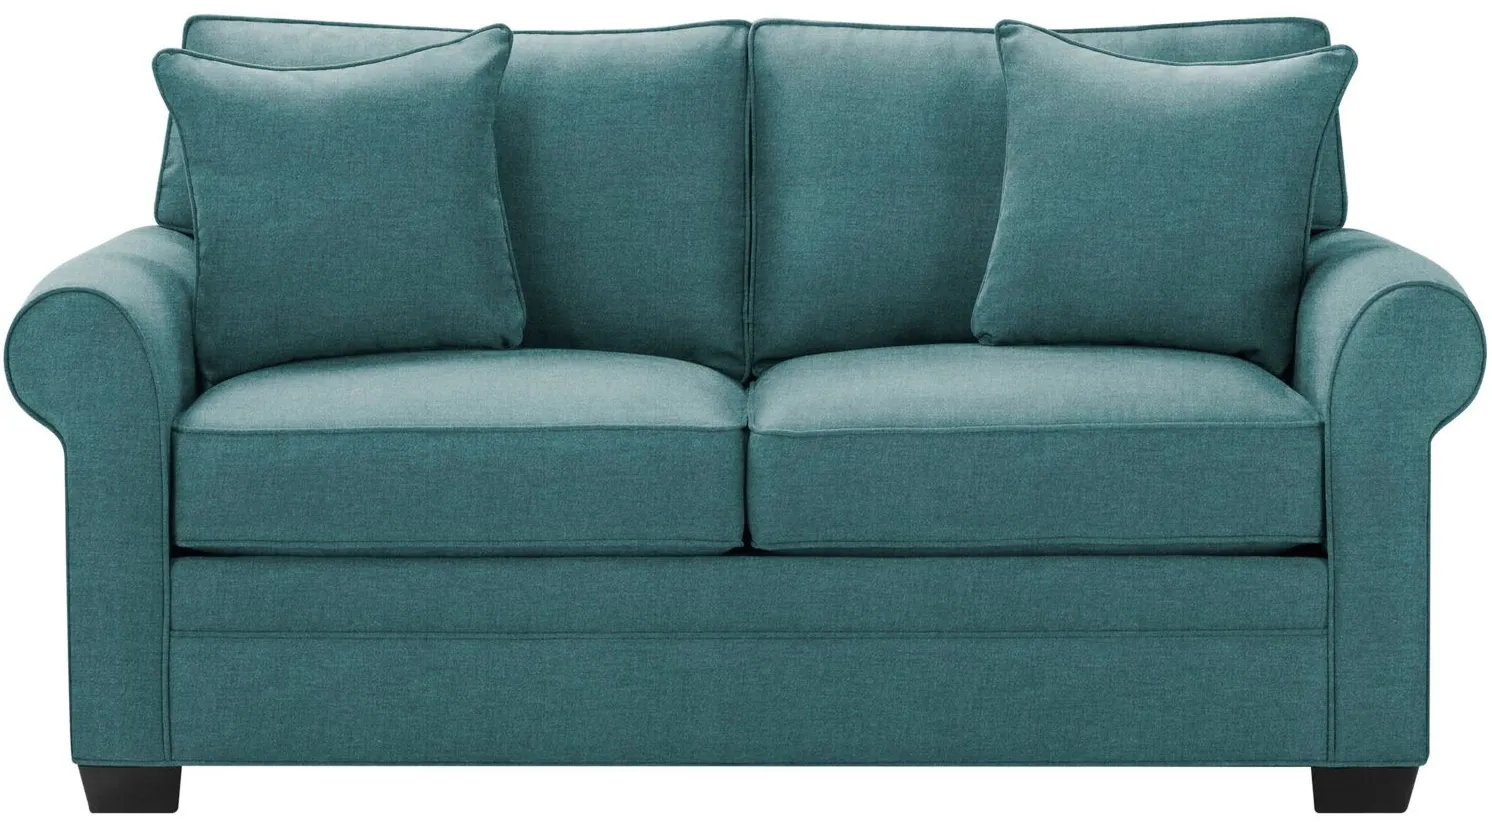 Glendora Full Sleeper Sofa in Santa Rosa Turquoise by H.M. Richards